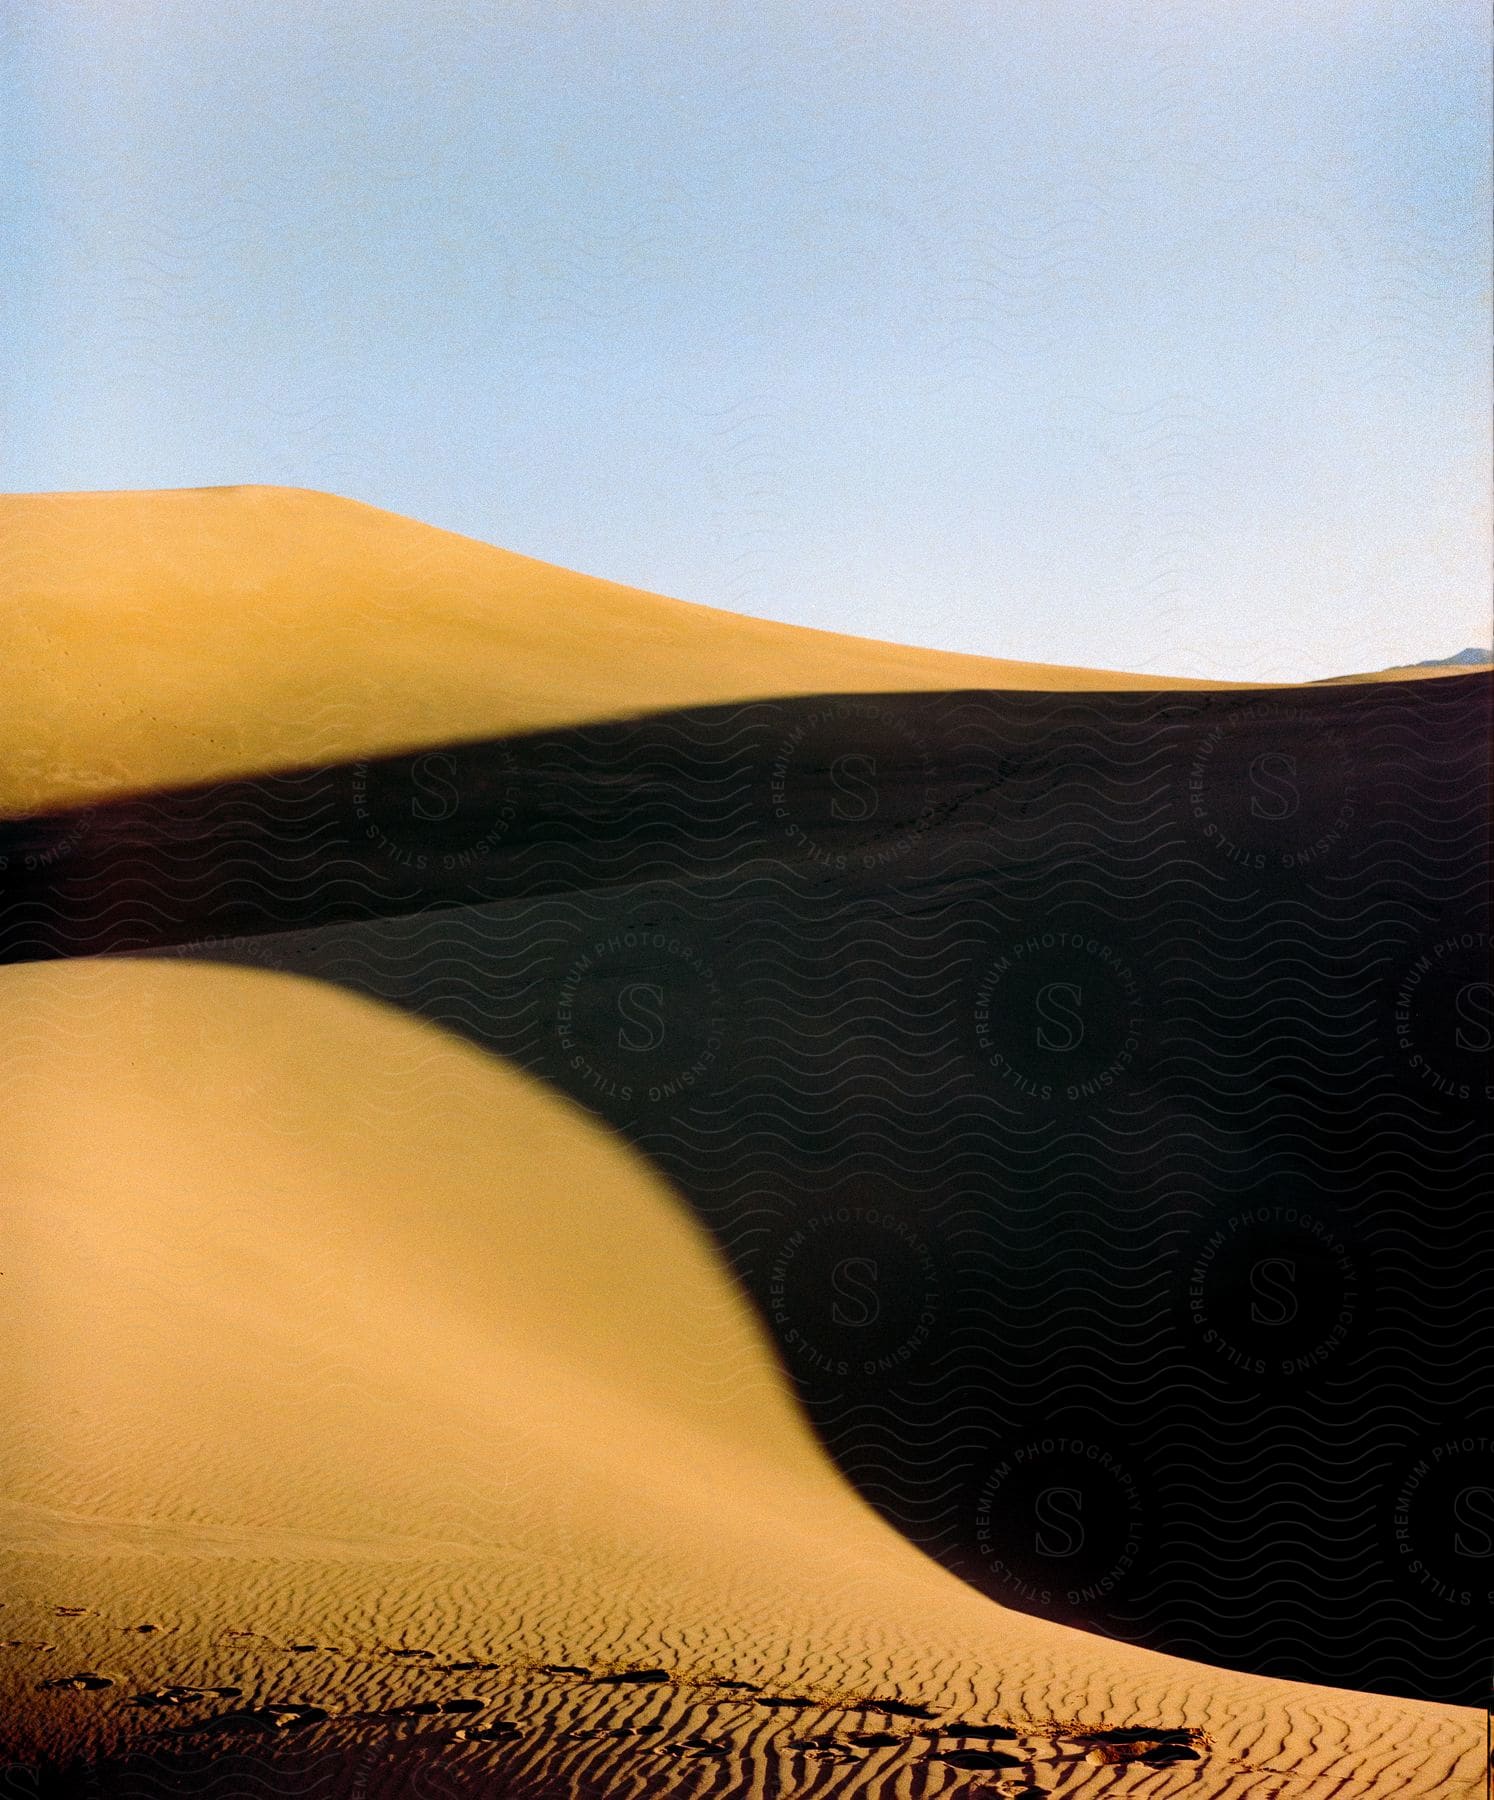 A sand dune casts a shadow on the desert below